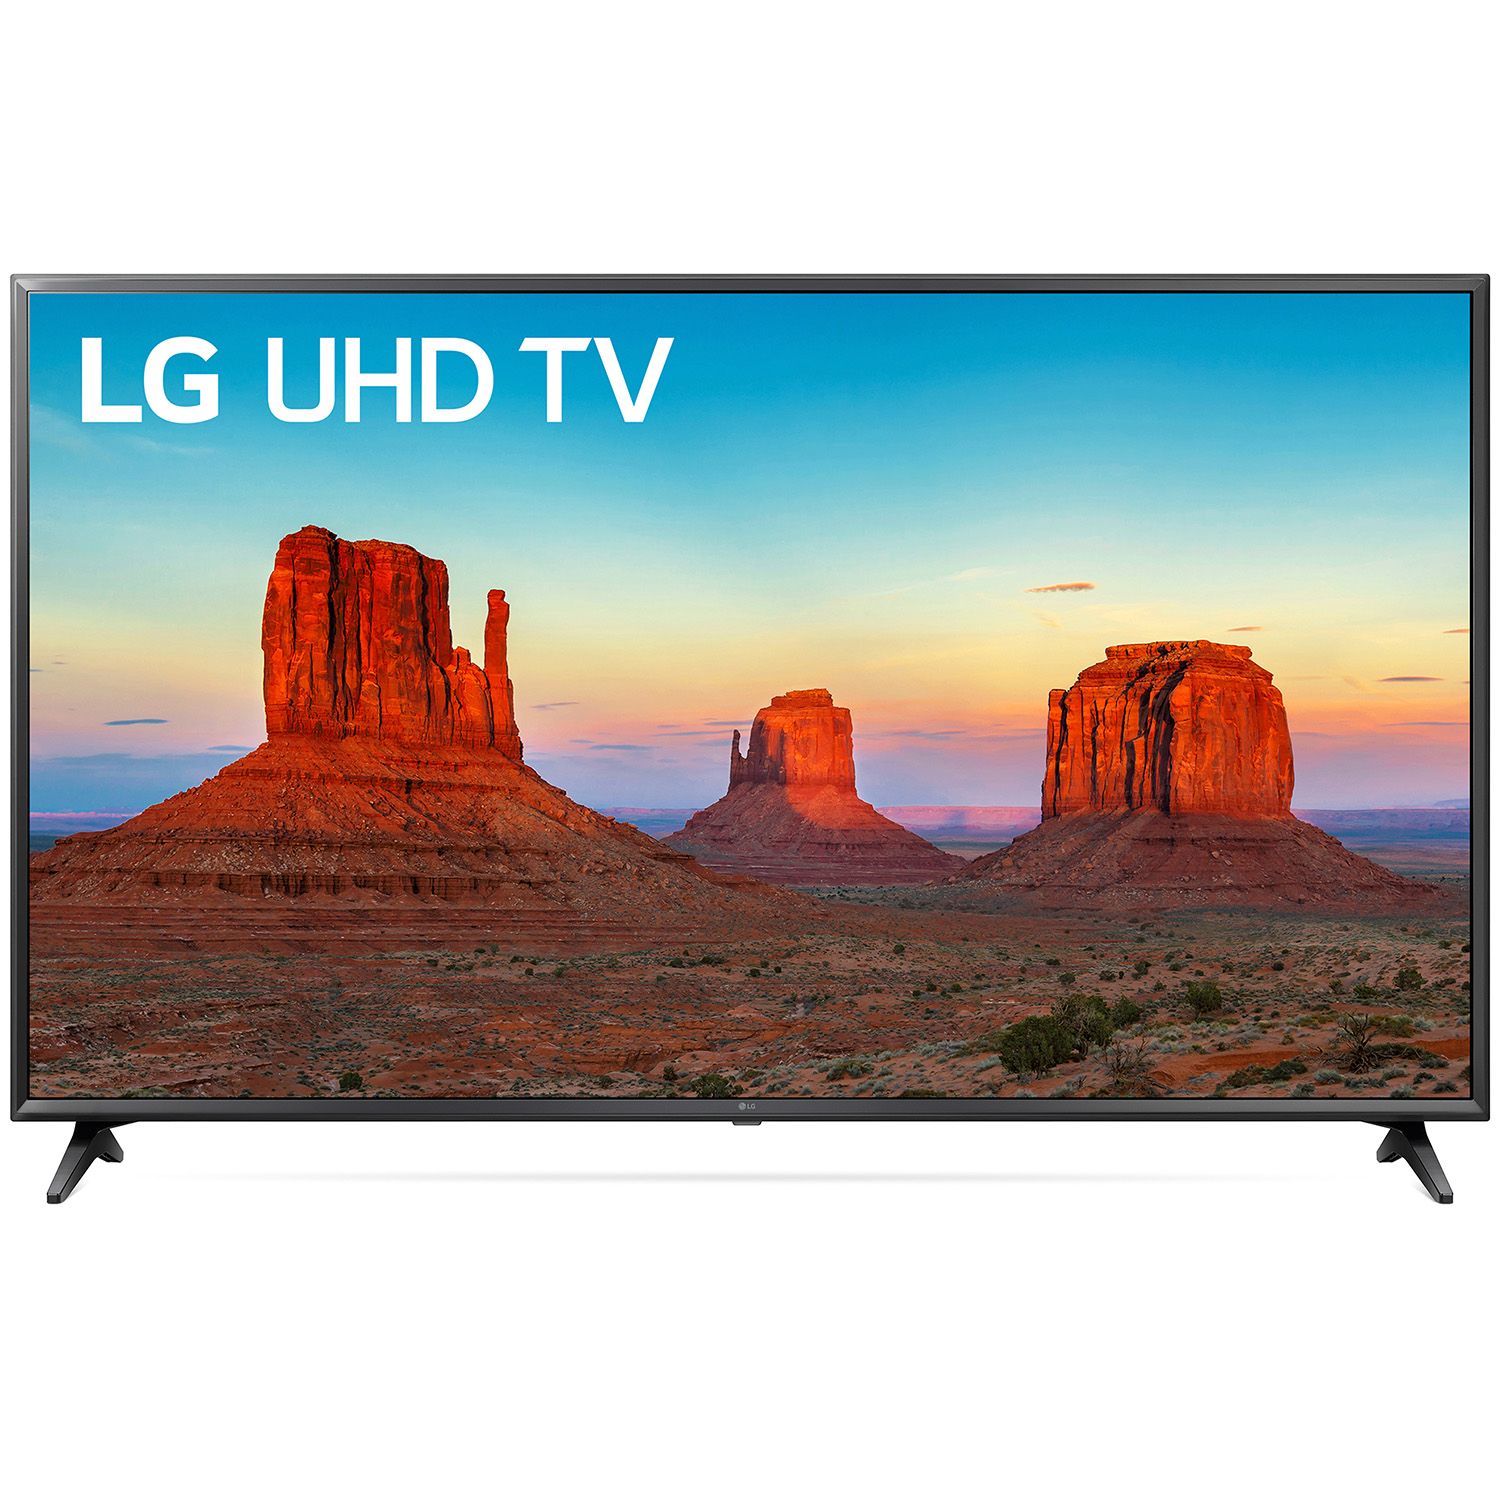 LG 65UK6090PUA 65″ 4K HDR Smart LED UHD TV